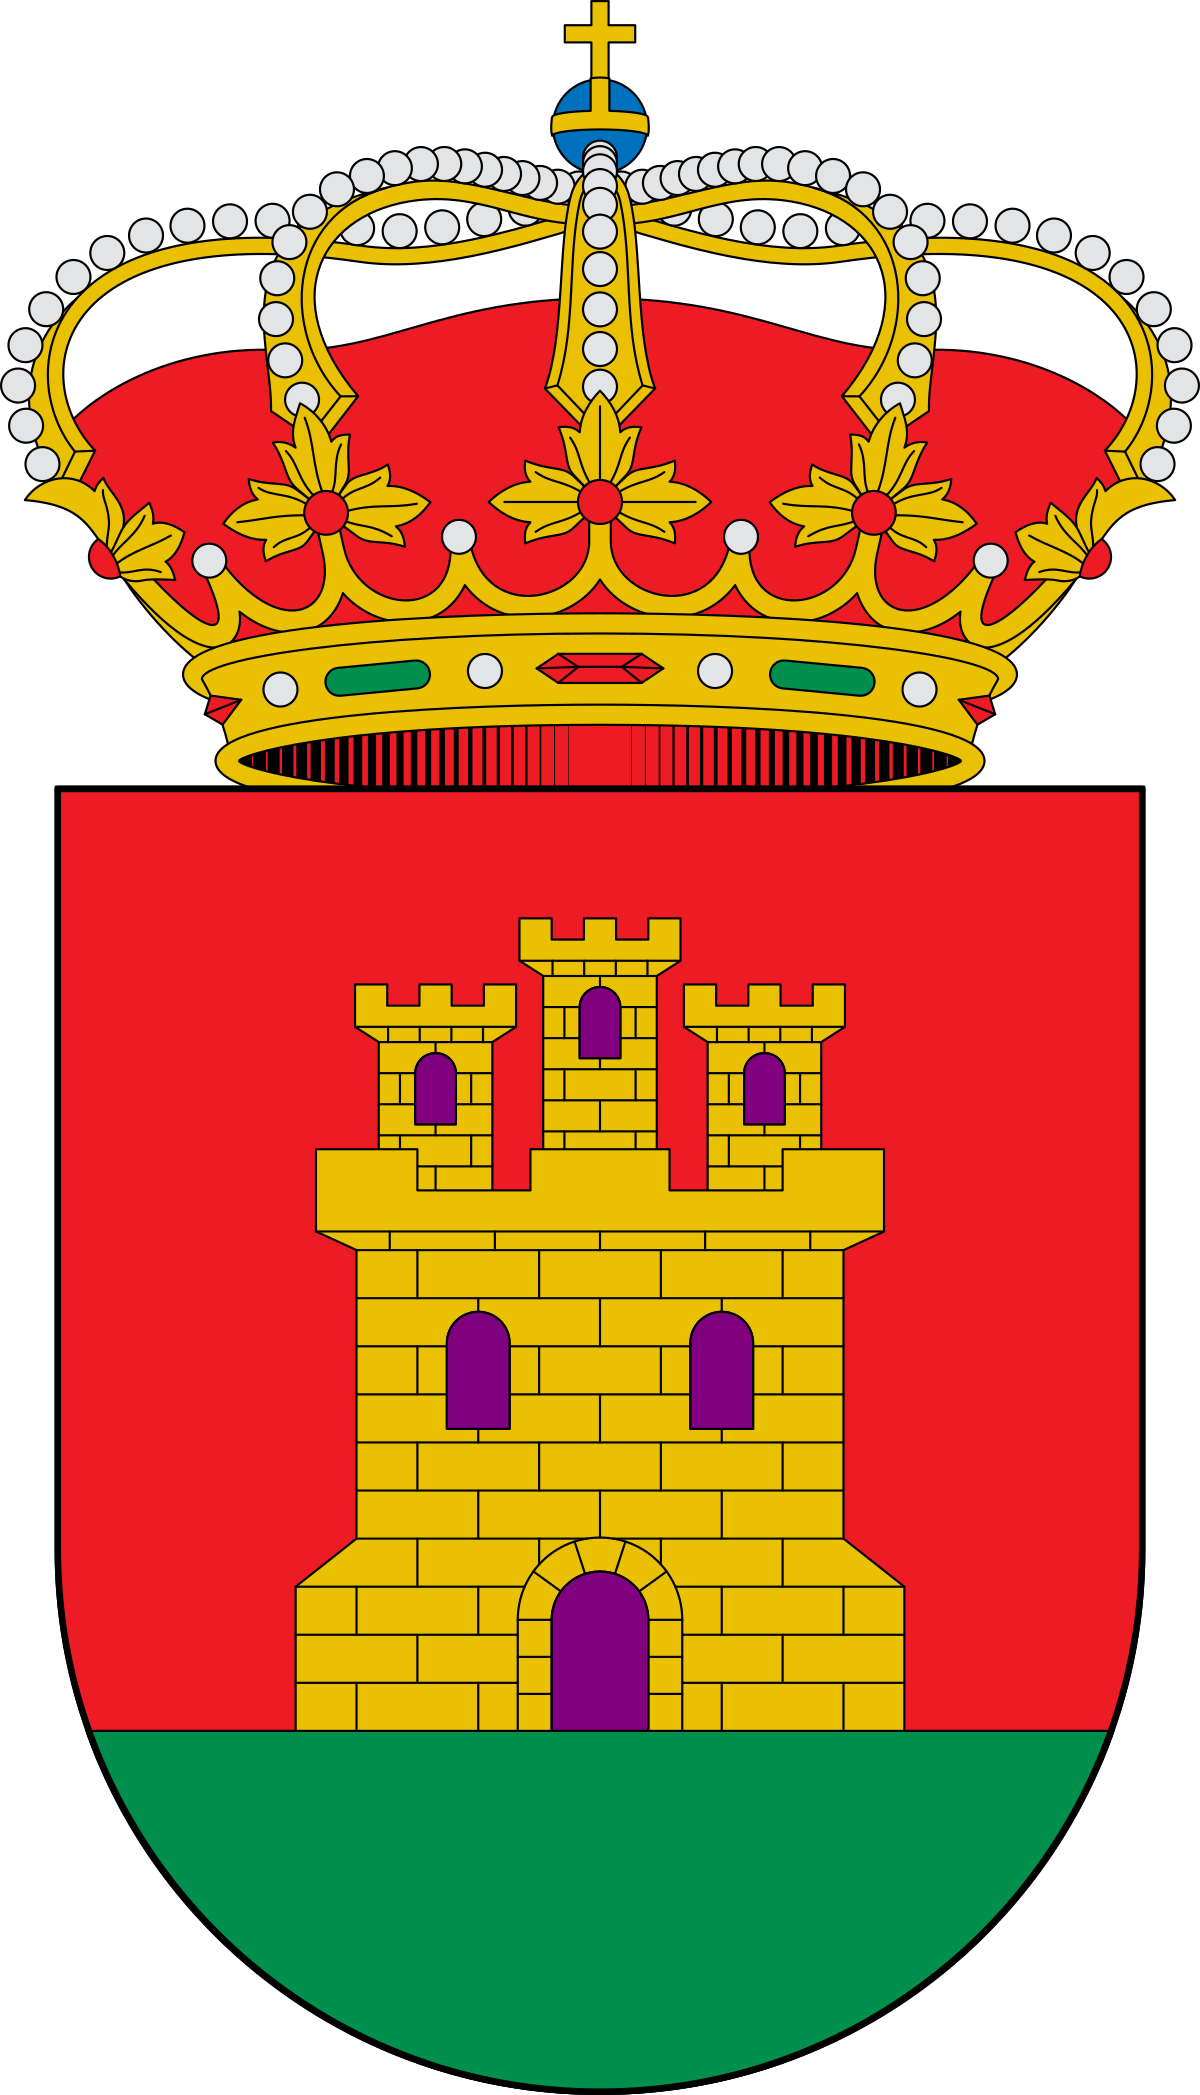 Escudo_de_Torredelcampo_(Jaén).svg